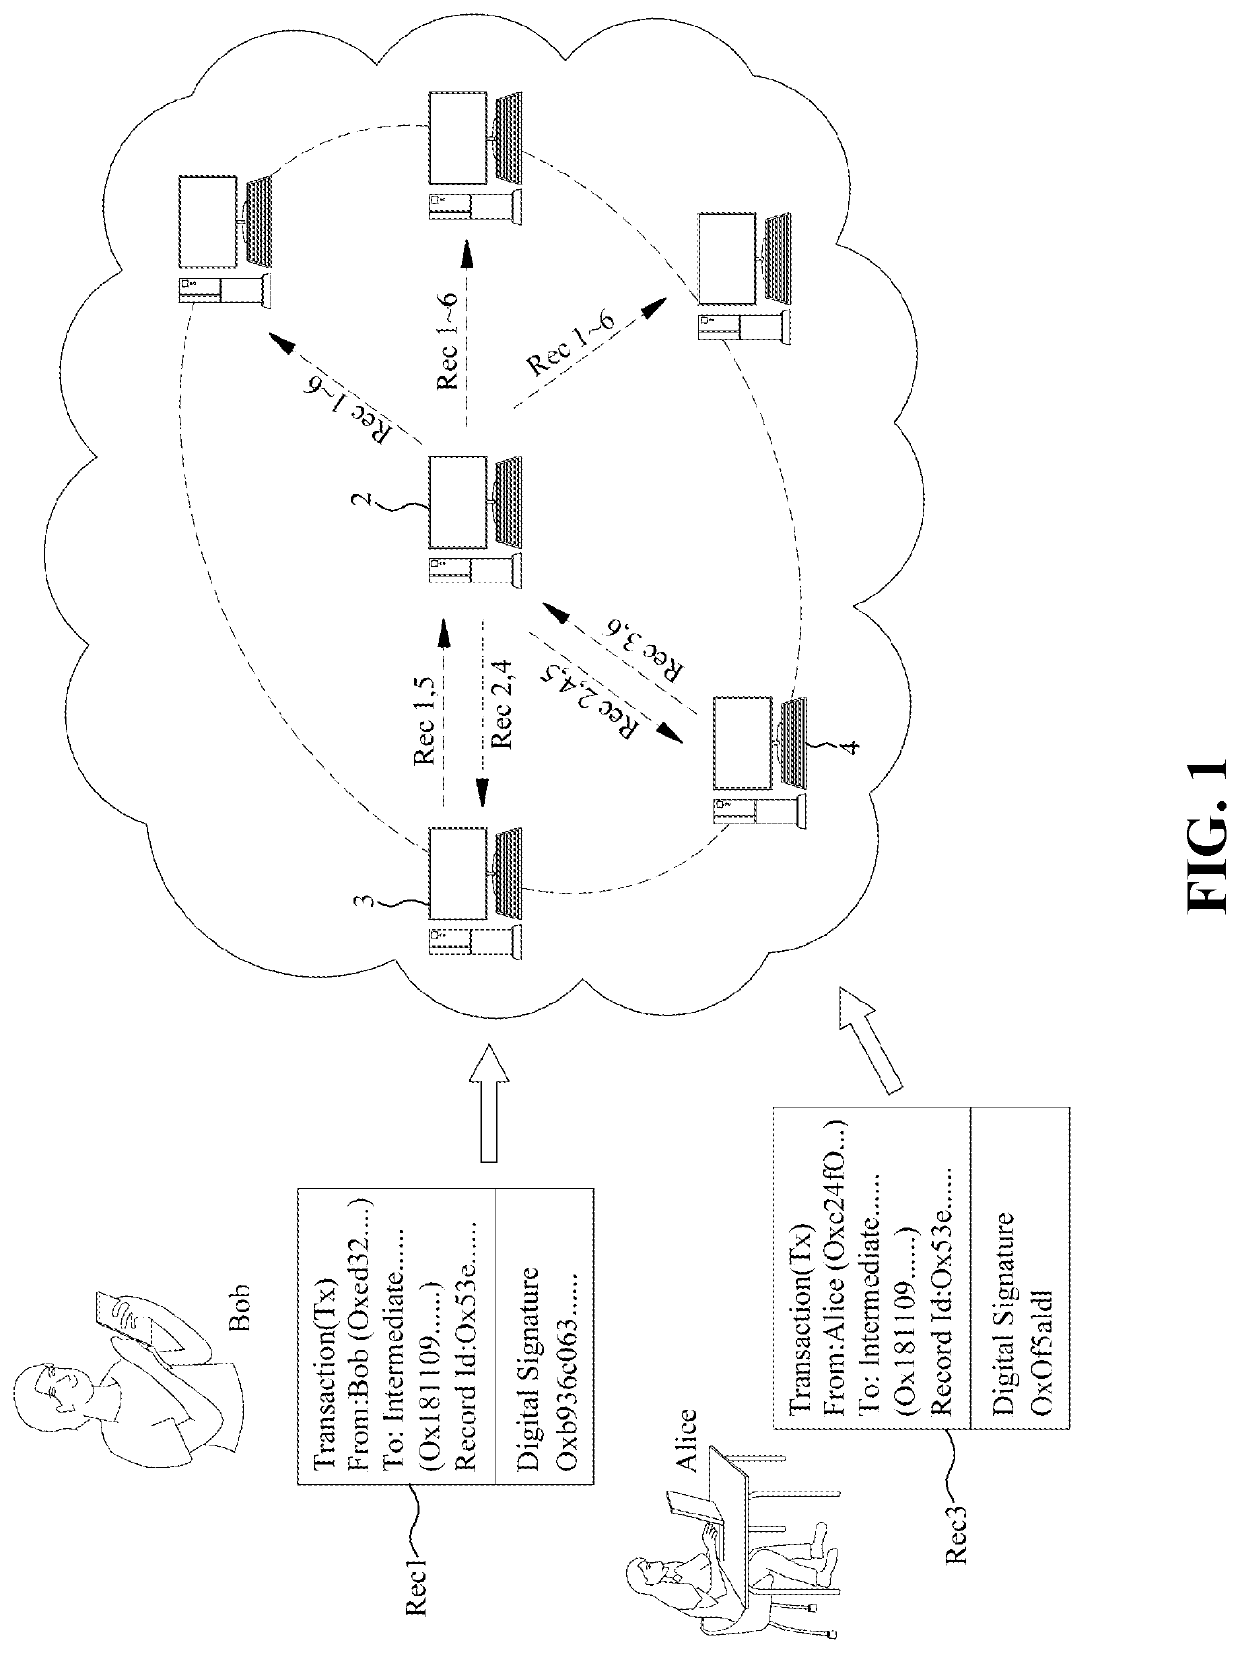 Blockchain-based transaction processing method and apparatus